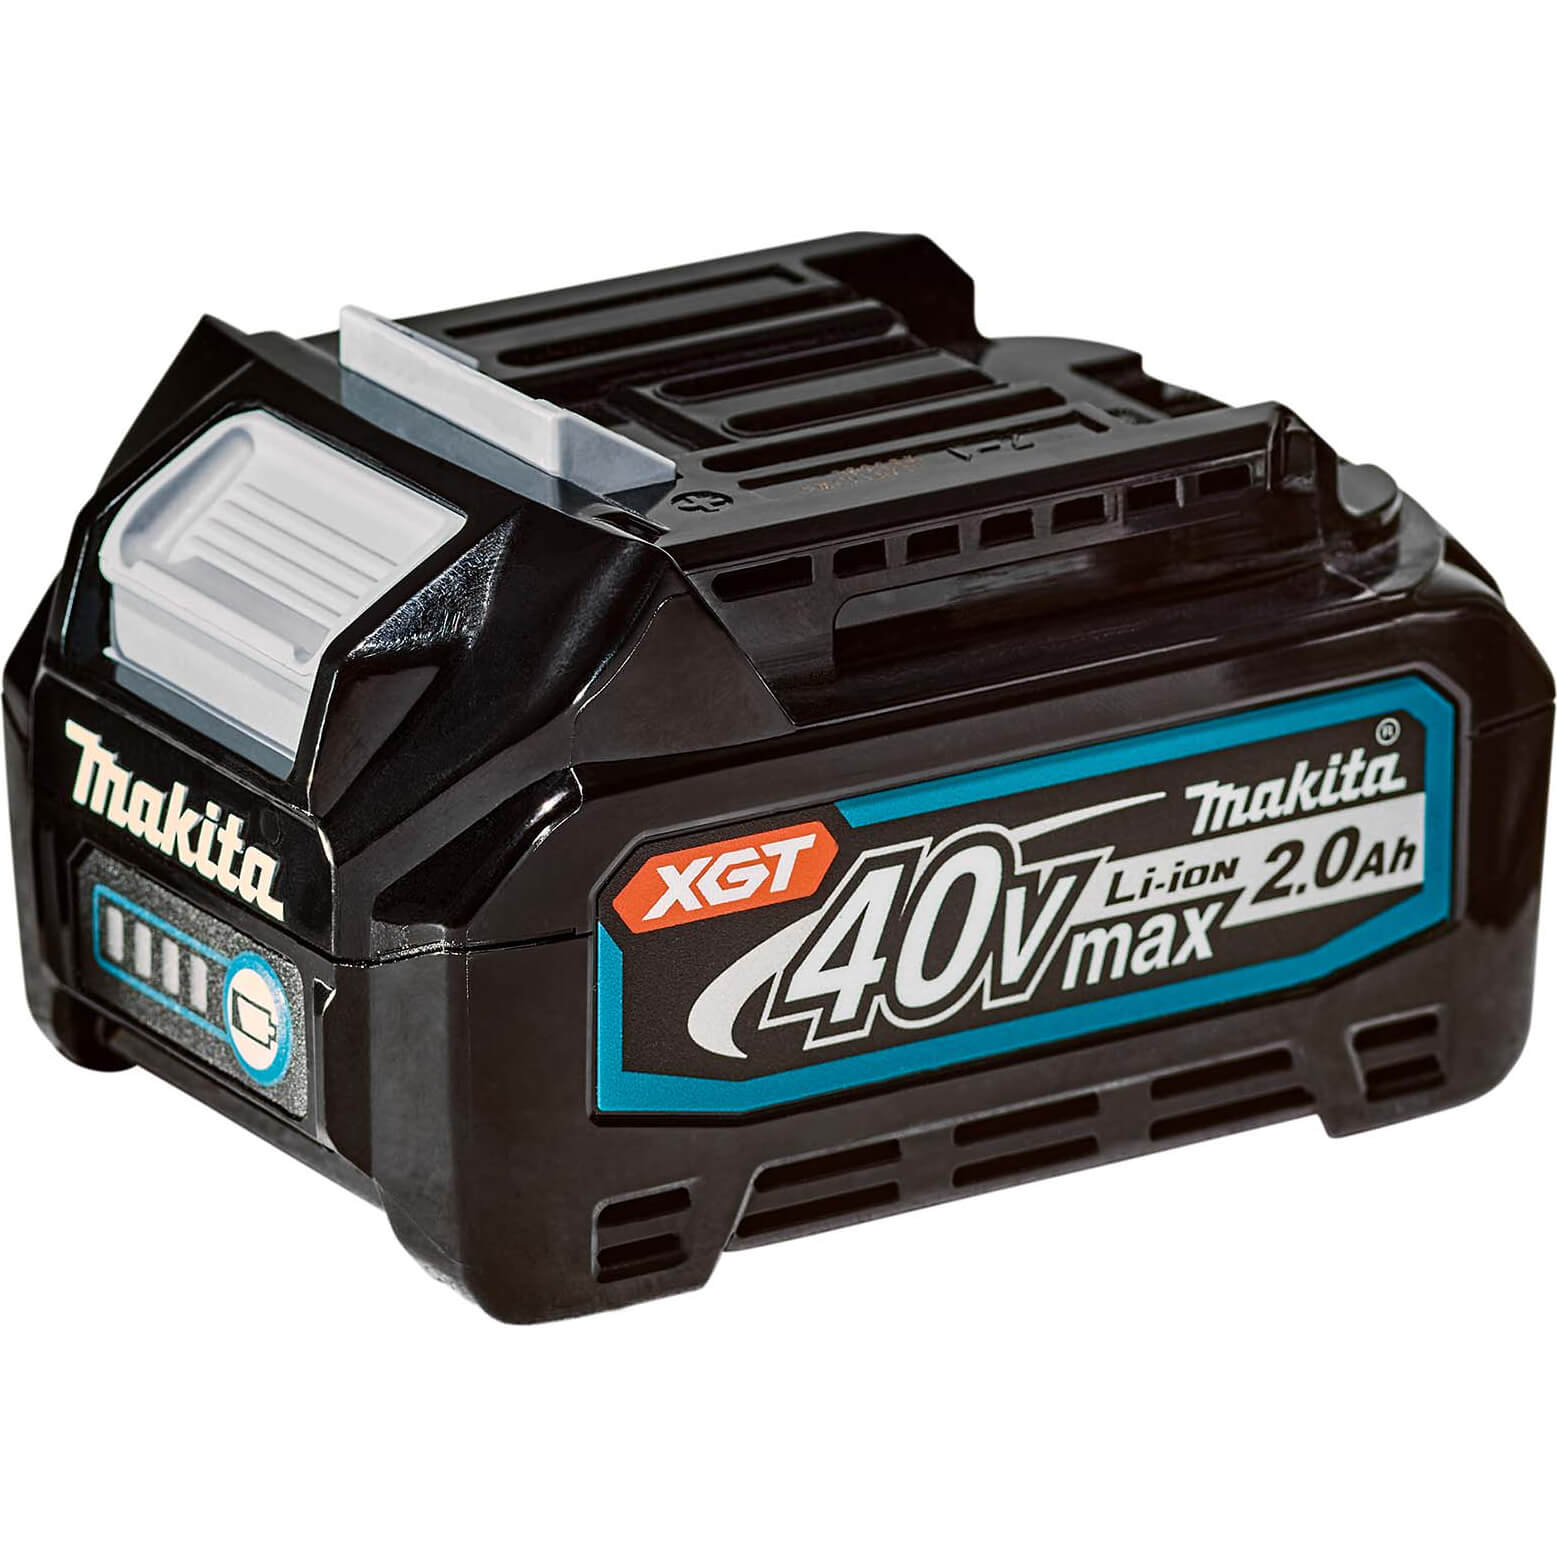 Photos - Power Tool Battery Makita BL4020 40v Max XGT Cordless Li-ion Battery 2ah 2ah 191L29-0 